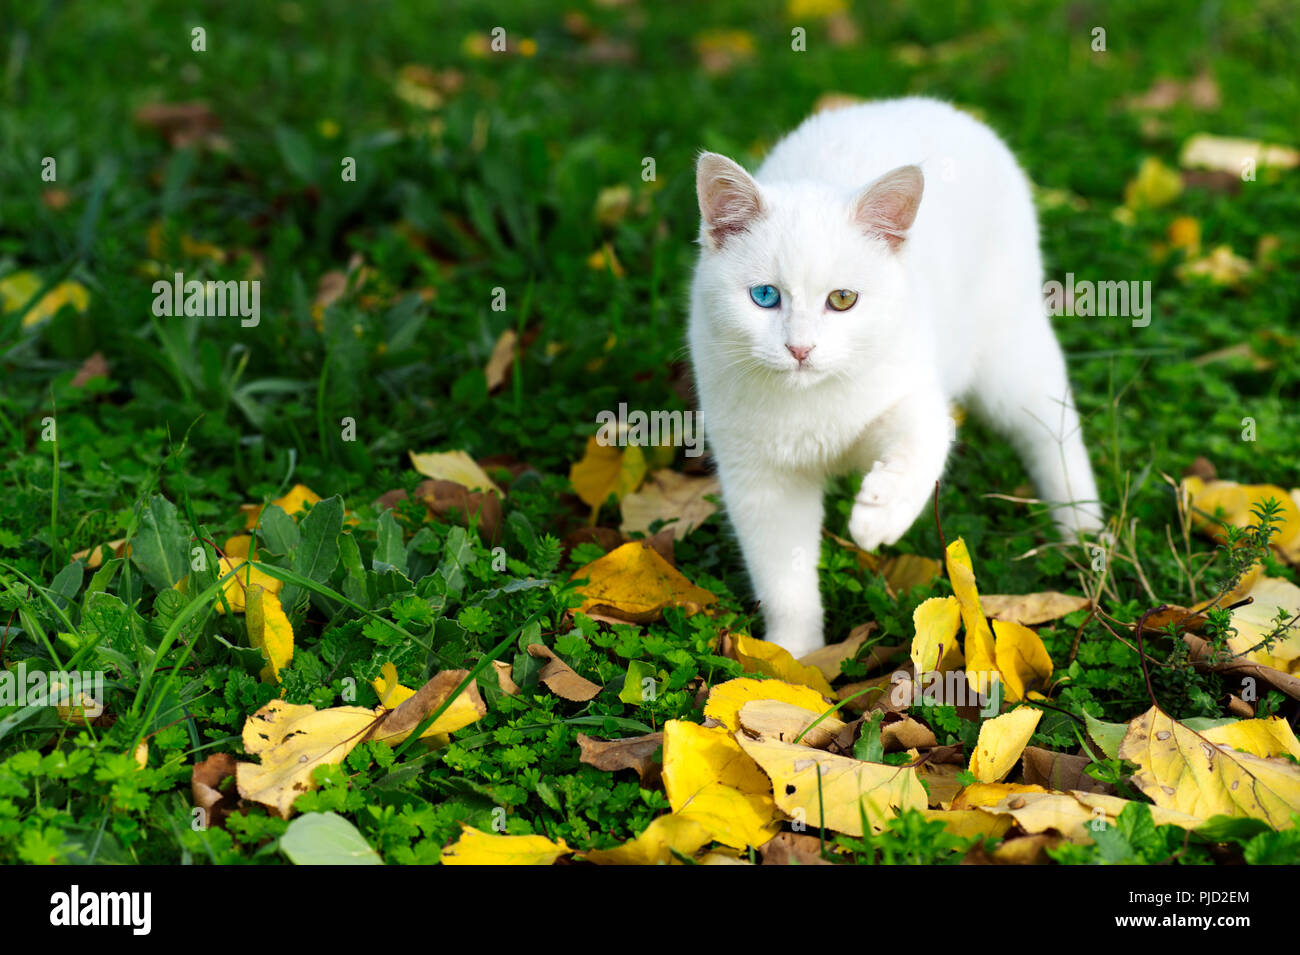 Odd eyed kitten walking on grass with fall foliage Stock Photo